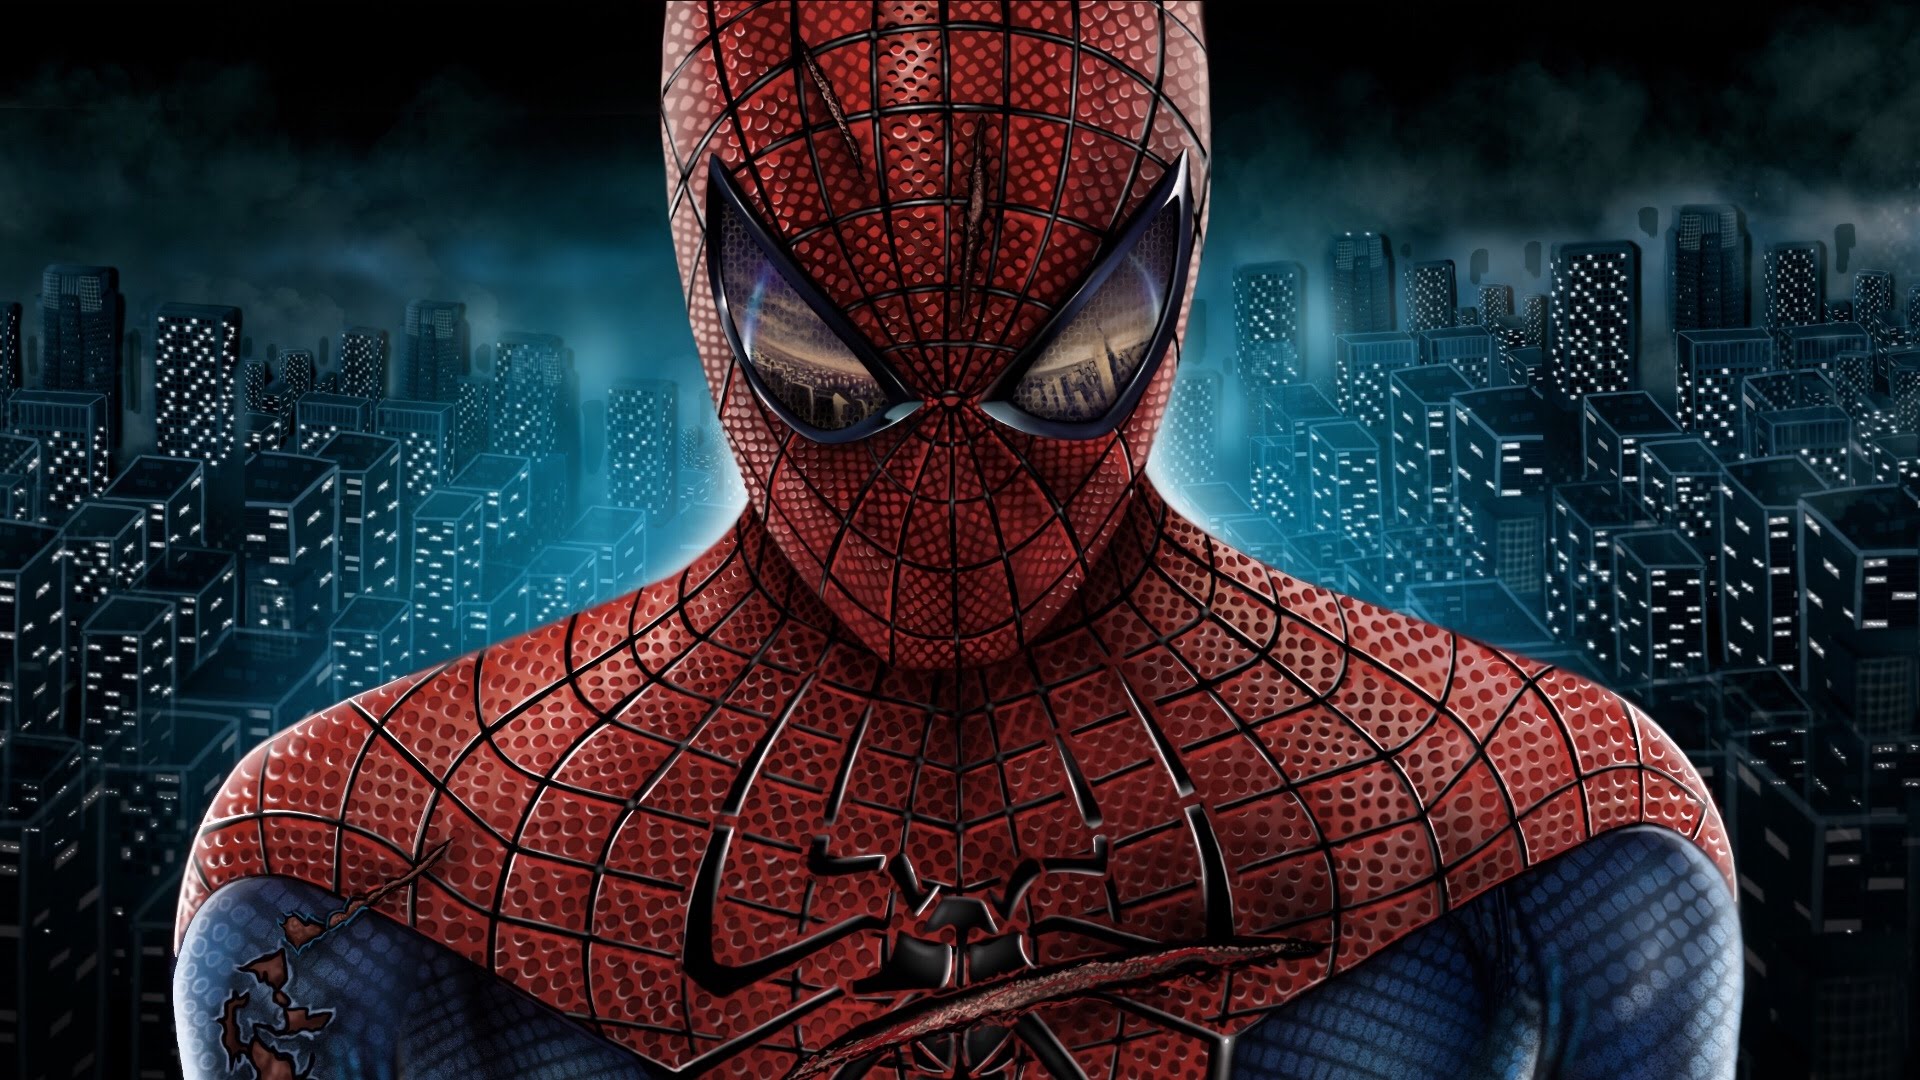 The Amazing Spiderman - Amazing Spider Man Painting. 